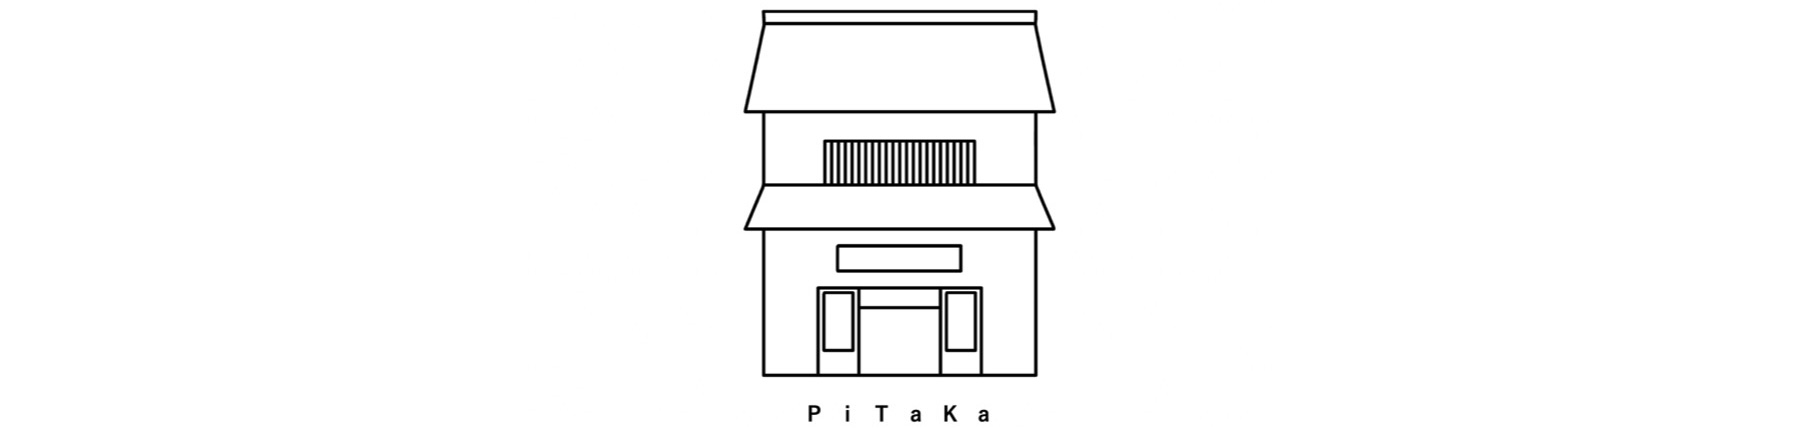 PiTaKa Home ピタカホーム ヘッダー画像